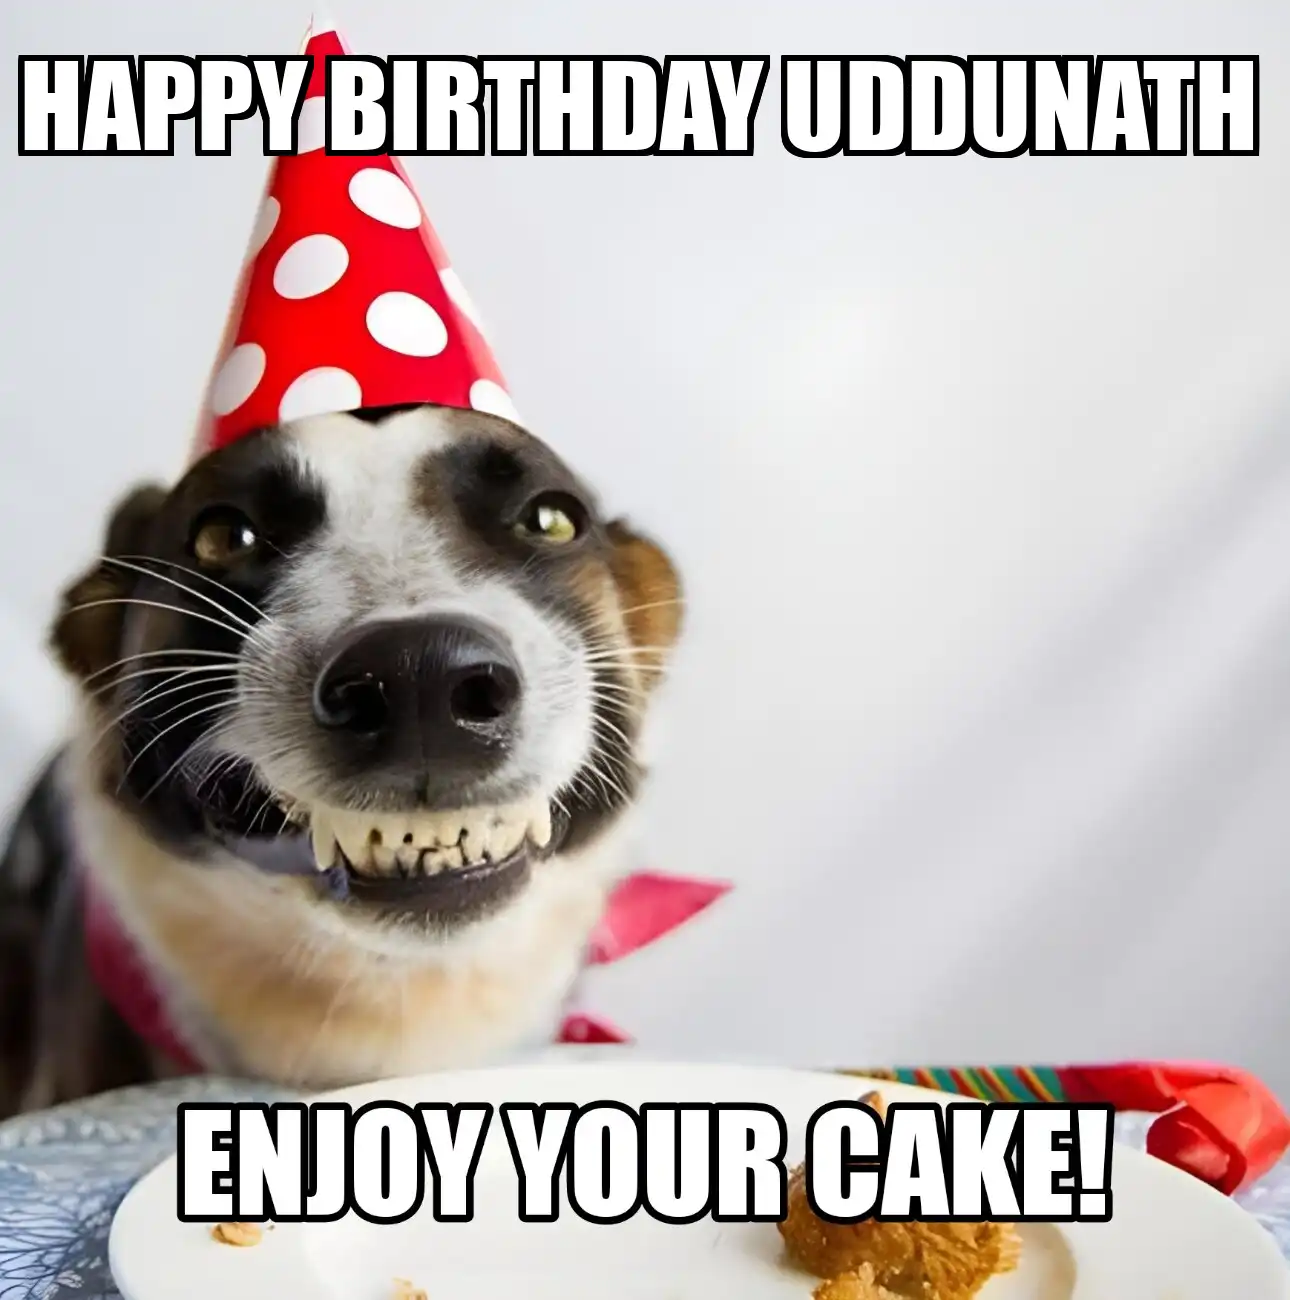 Happy Birthday Uddunath Enjoy Your Cake Dog Meme